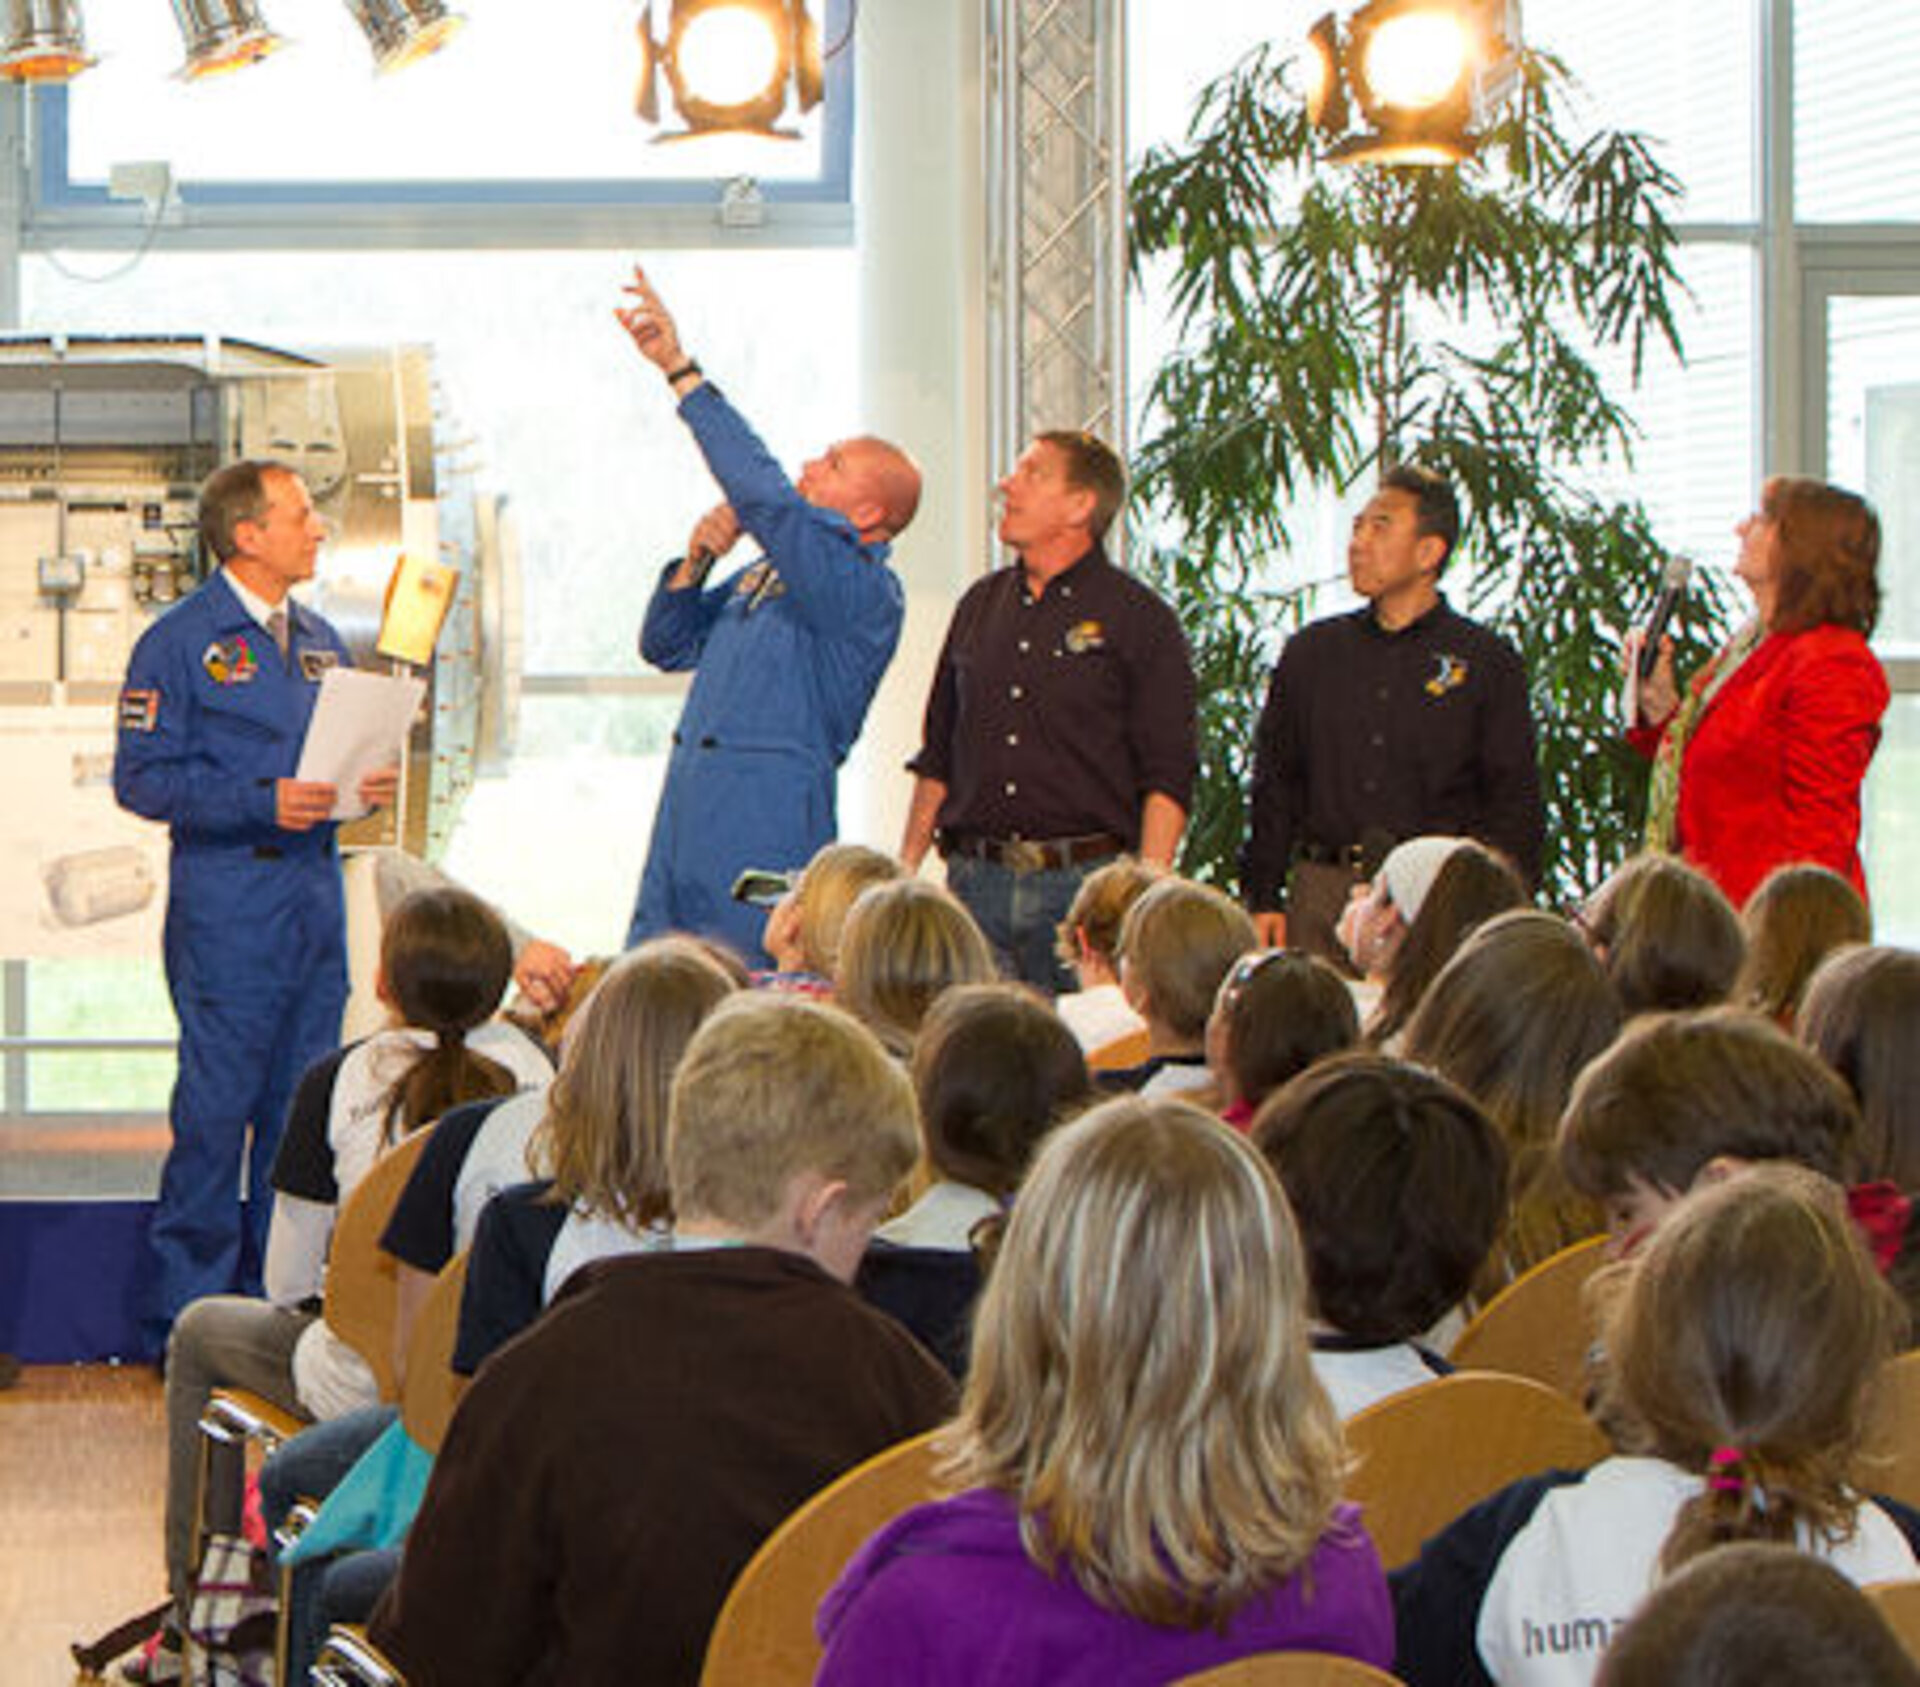 Four astronauts entertaining Mission X children